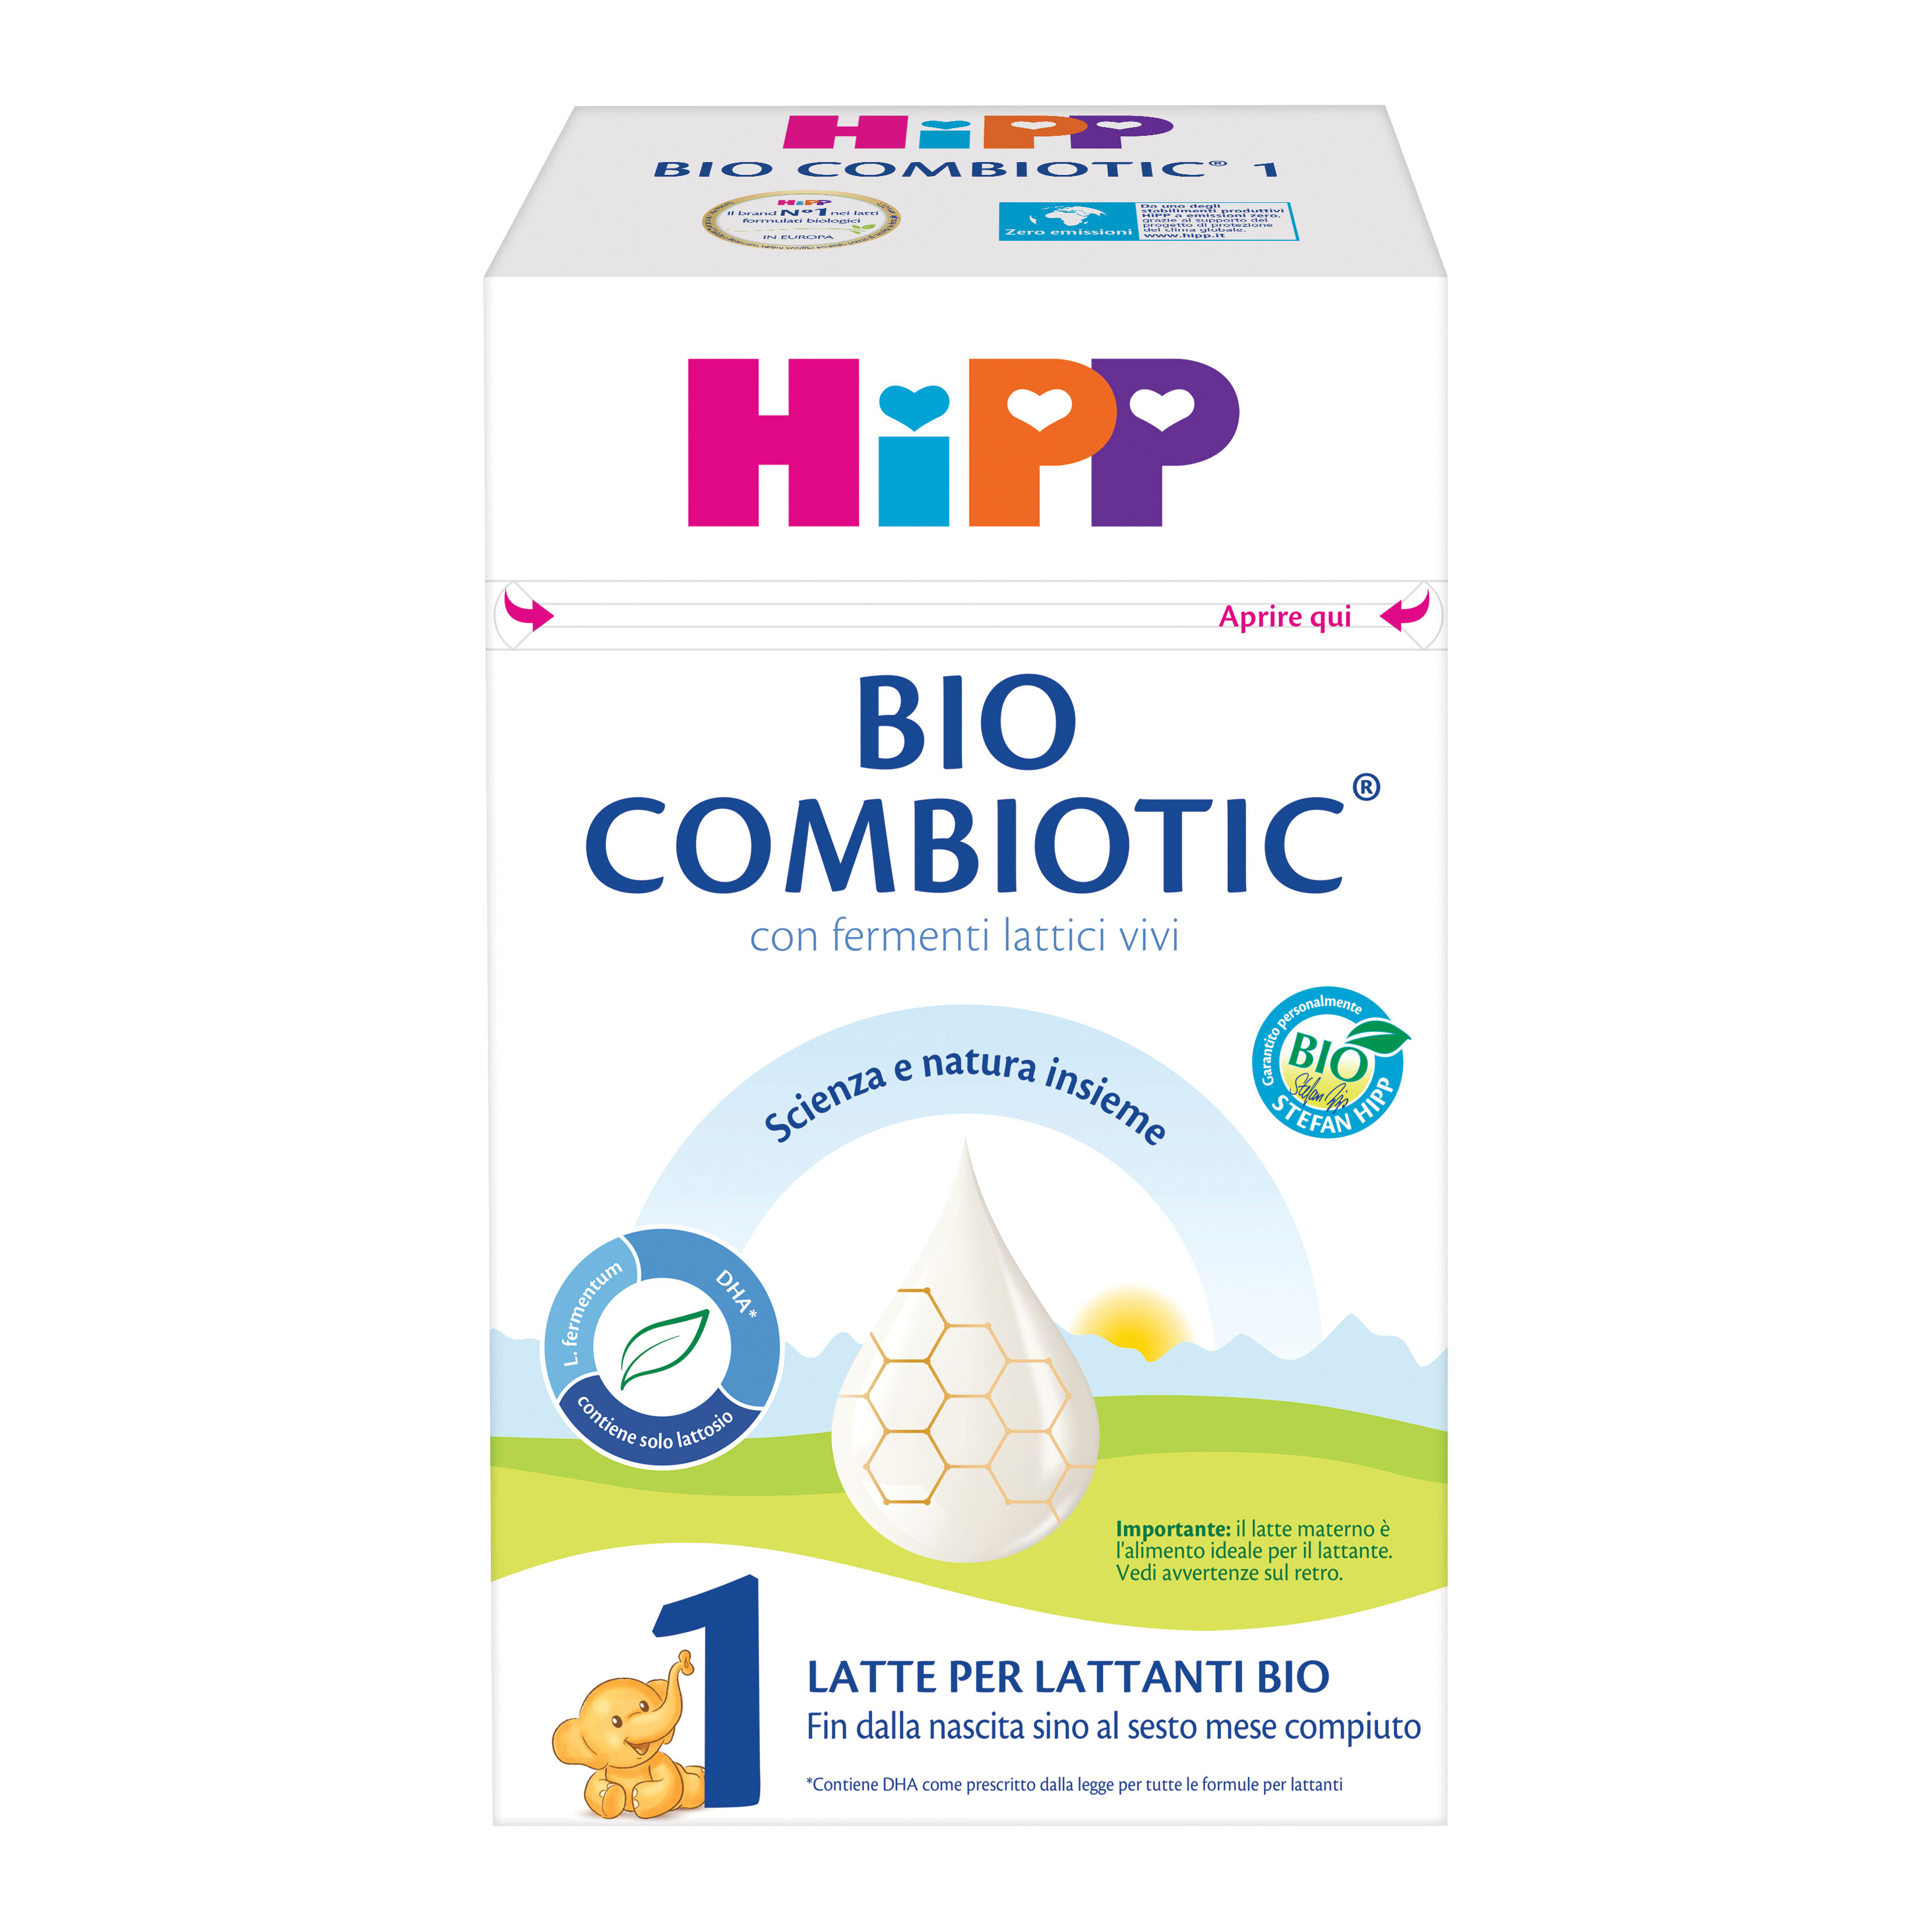 HIPP 1 bio combiotic 600 g